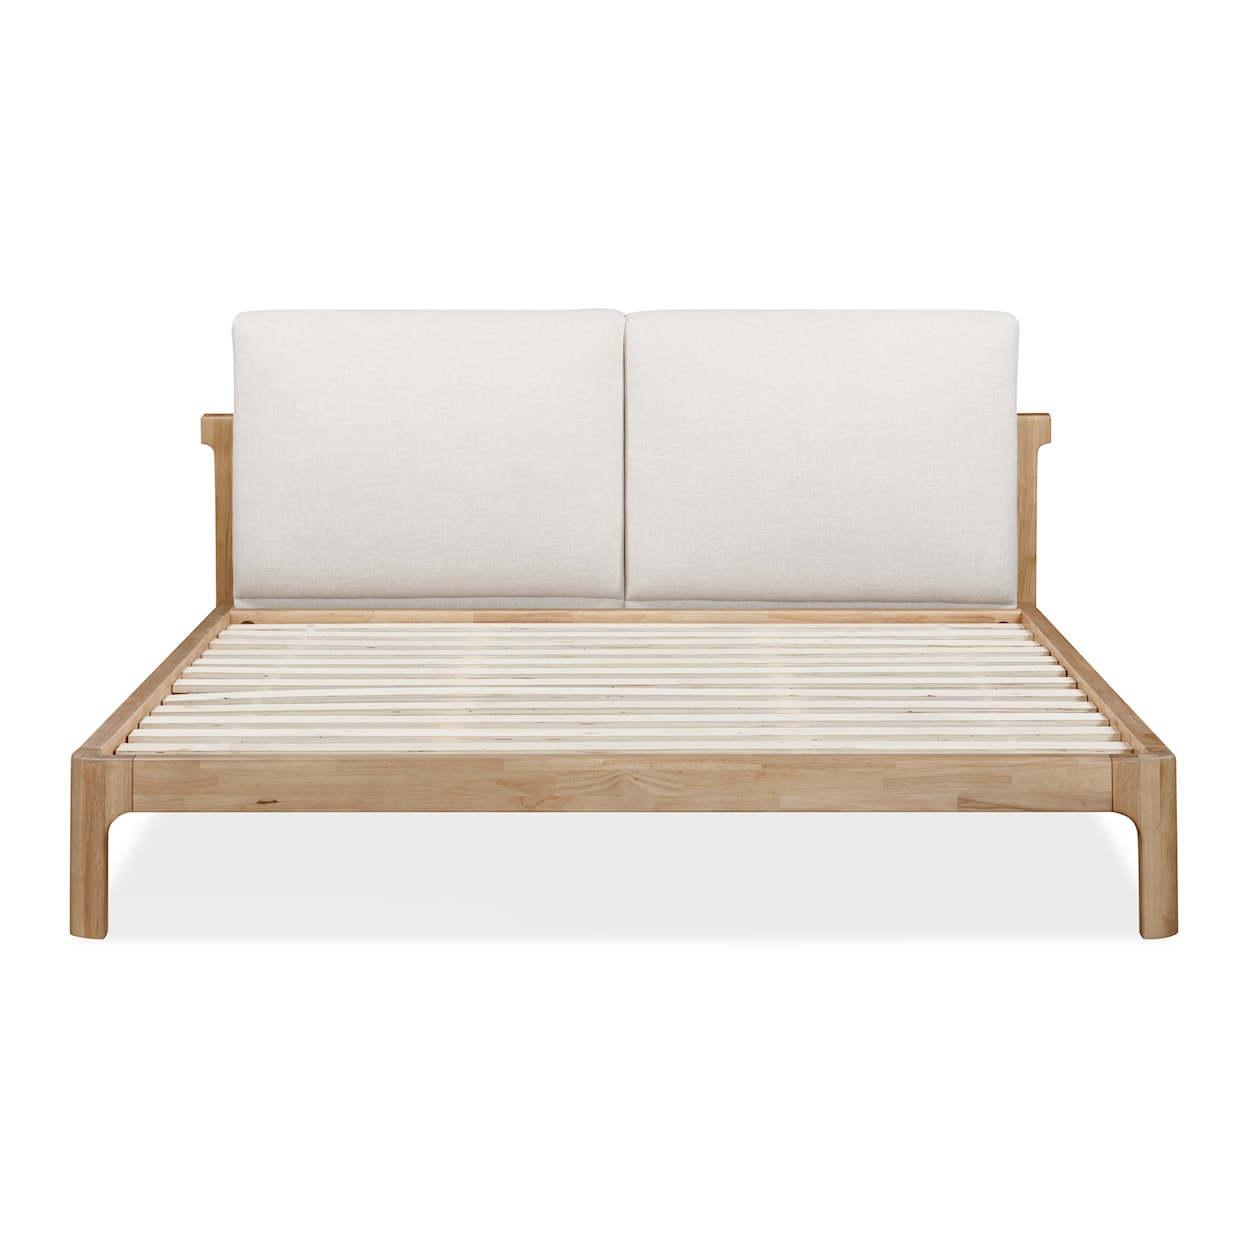 Modus International Furano King Upholstered Platform Bed